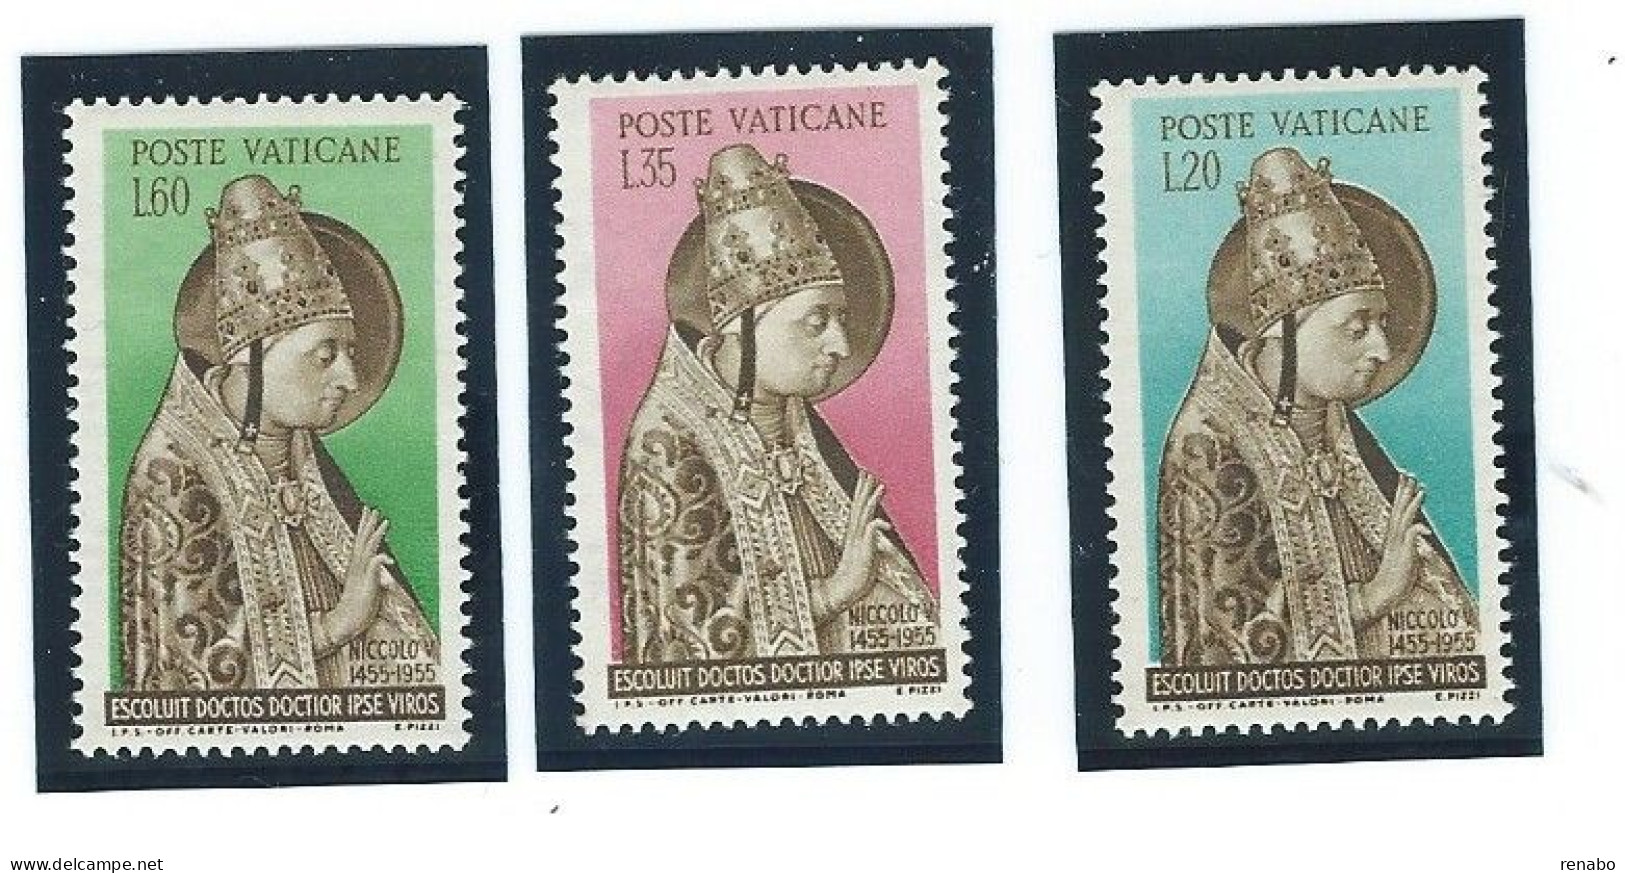 Vaticano 1955 ; Papa Niccolò V, Pope Nicholas V, Papst Nikolaus V: 5° Centenario Della Morte. Serie Completa. - Unused Stamps